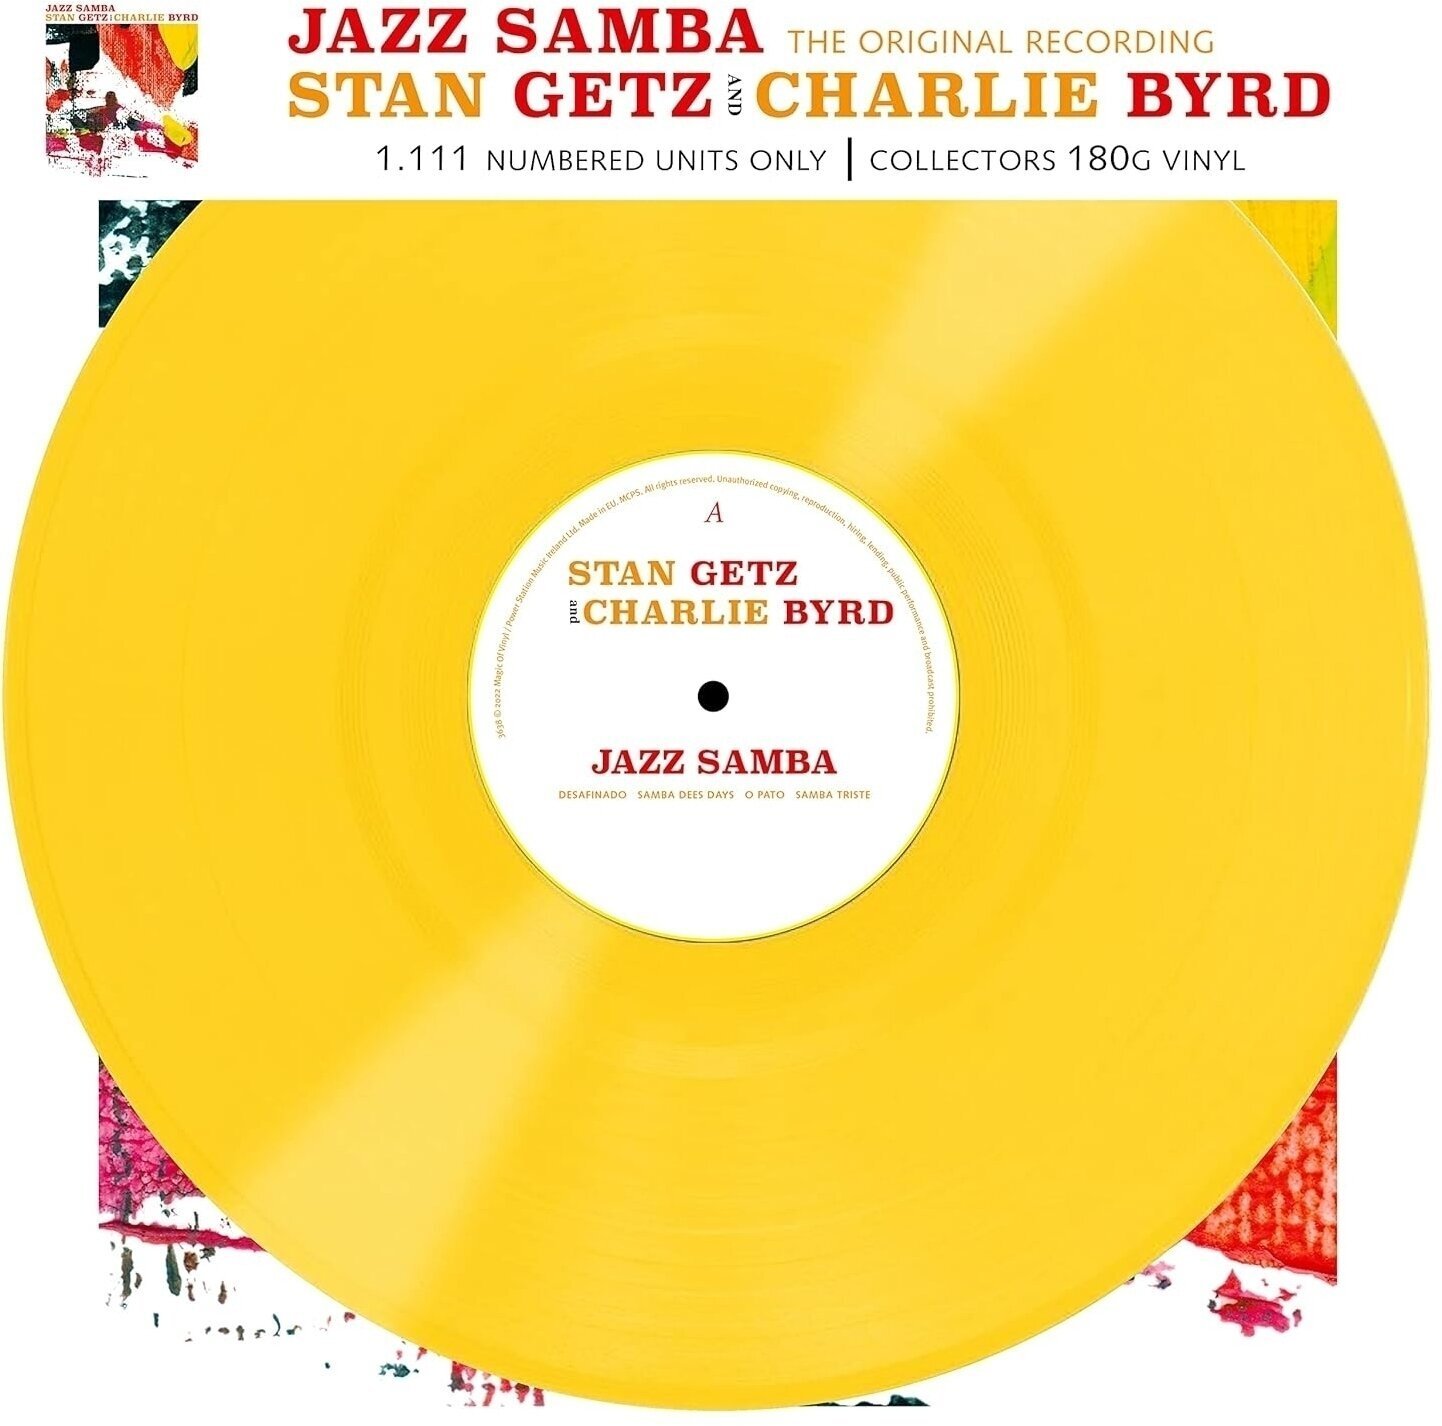 Stan Getz & Charlie Byrd - Jazz Samba (Limited Edition) (Numbered) (Reissue) (Yellow Coloured) (LP) Stan Getz & Charlie Byrd